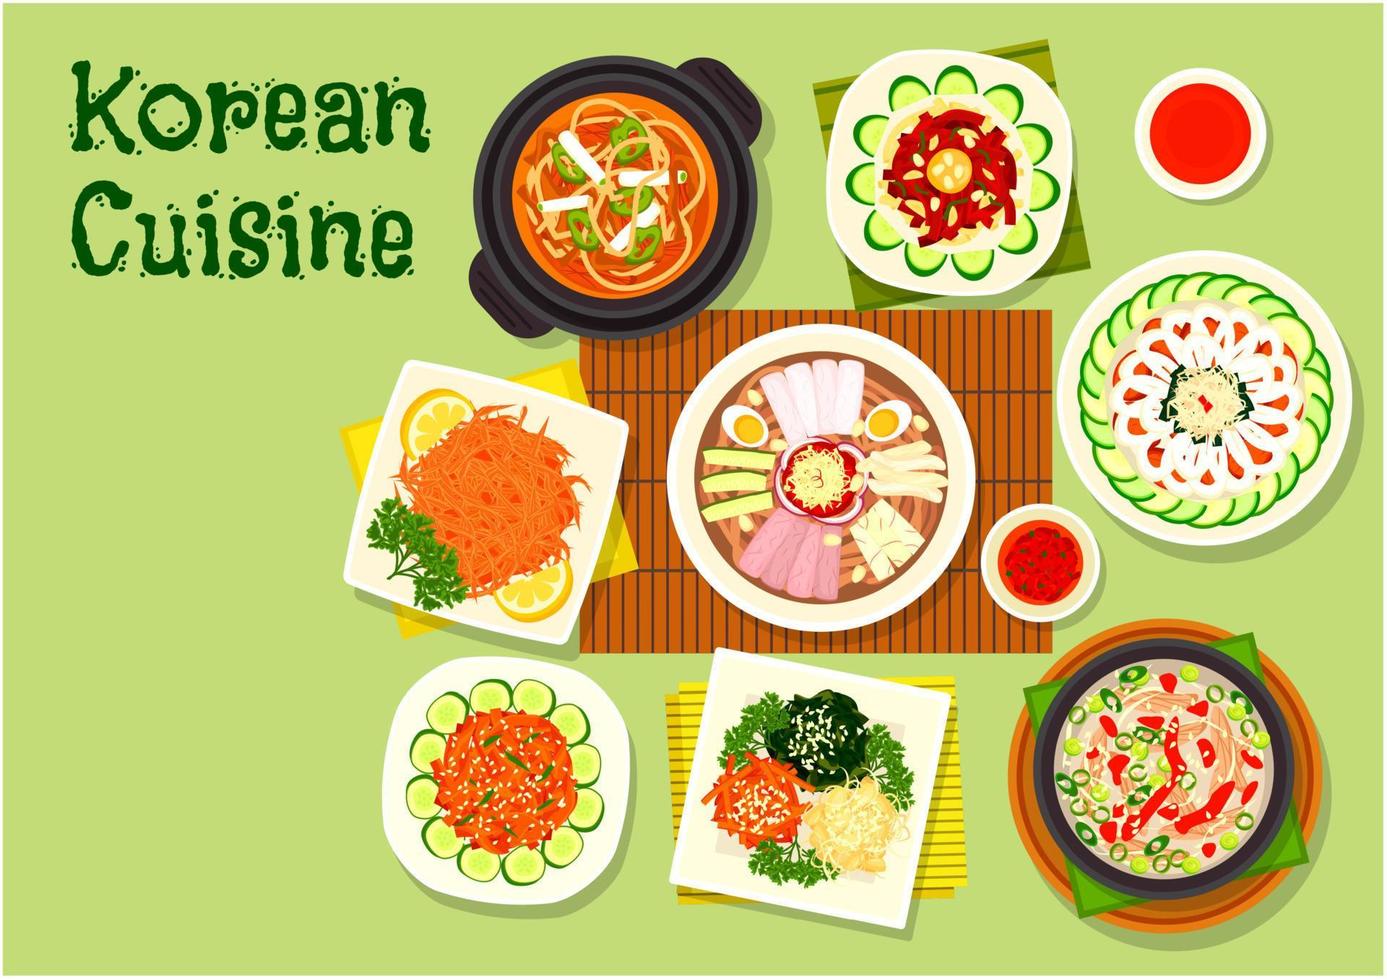 Korean cuisine dishes icon for asian menu design vector